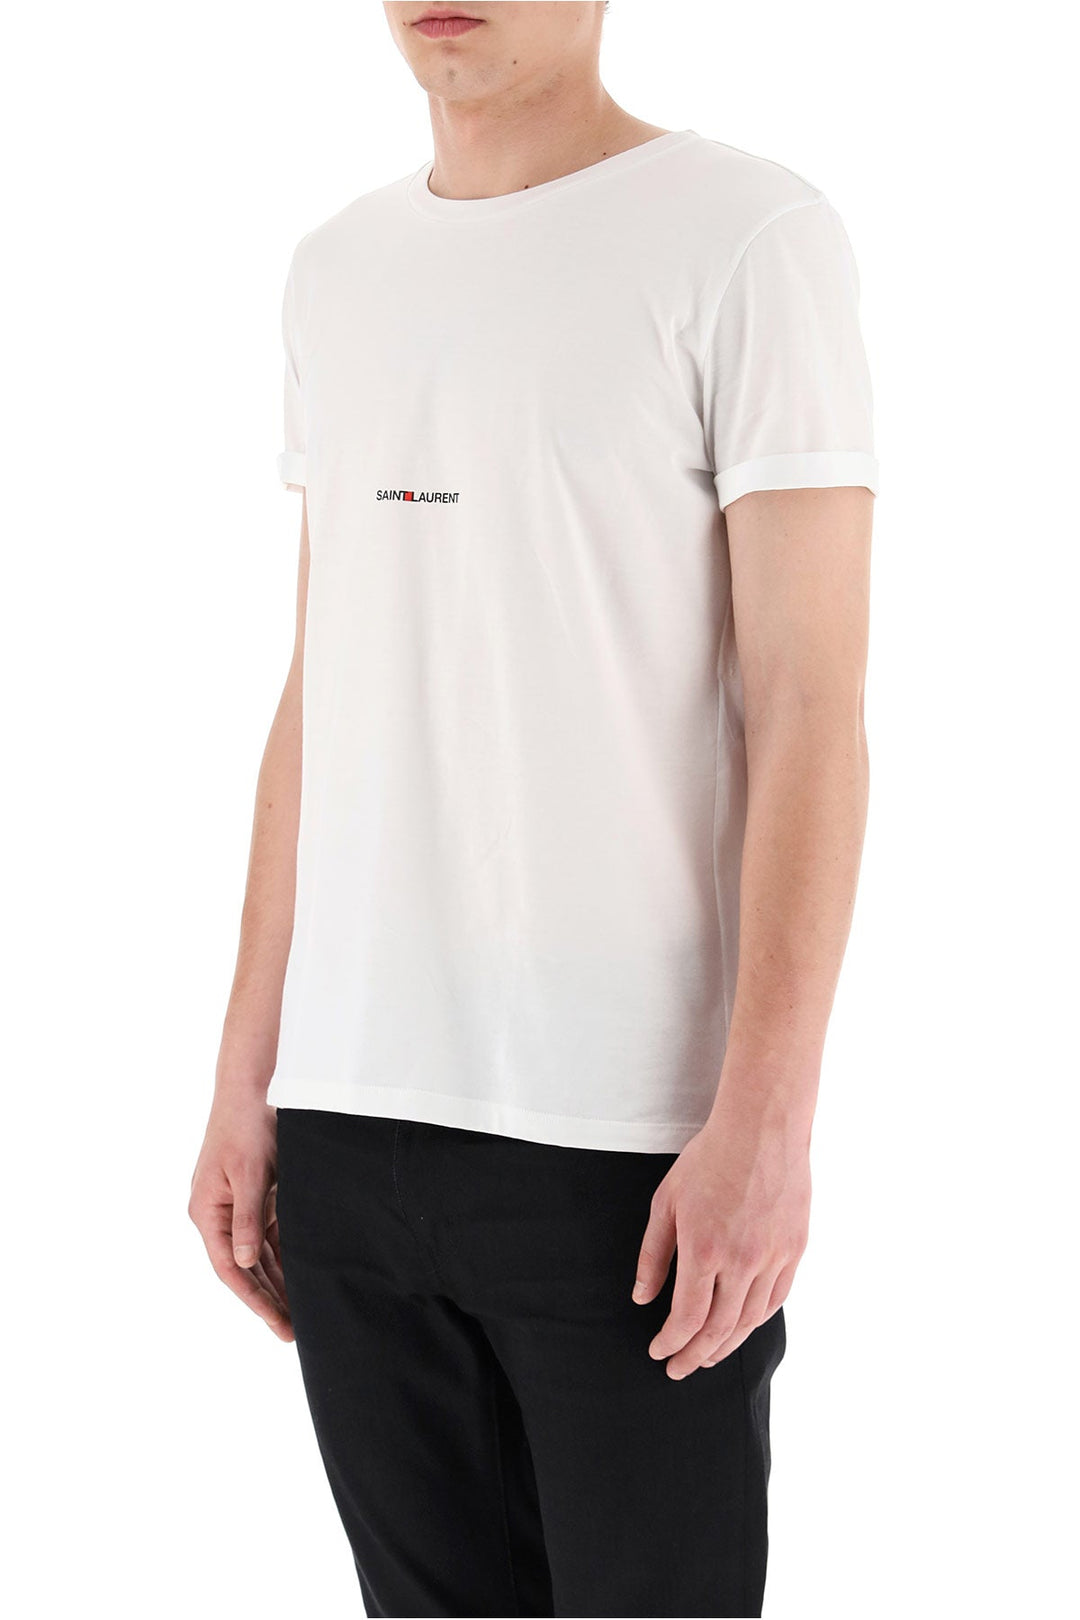 T Shirt Stampa Logo - Saint Laurent - Uomo